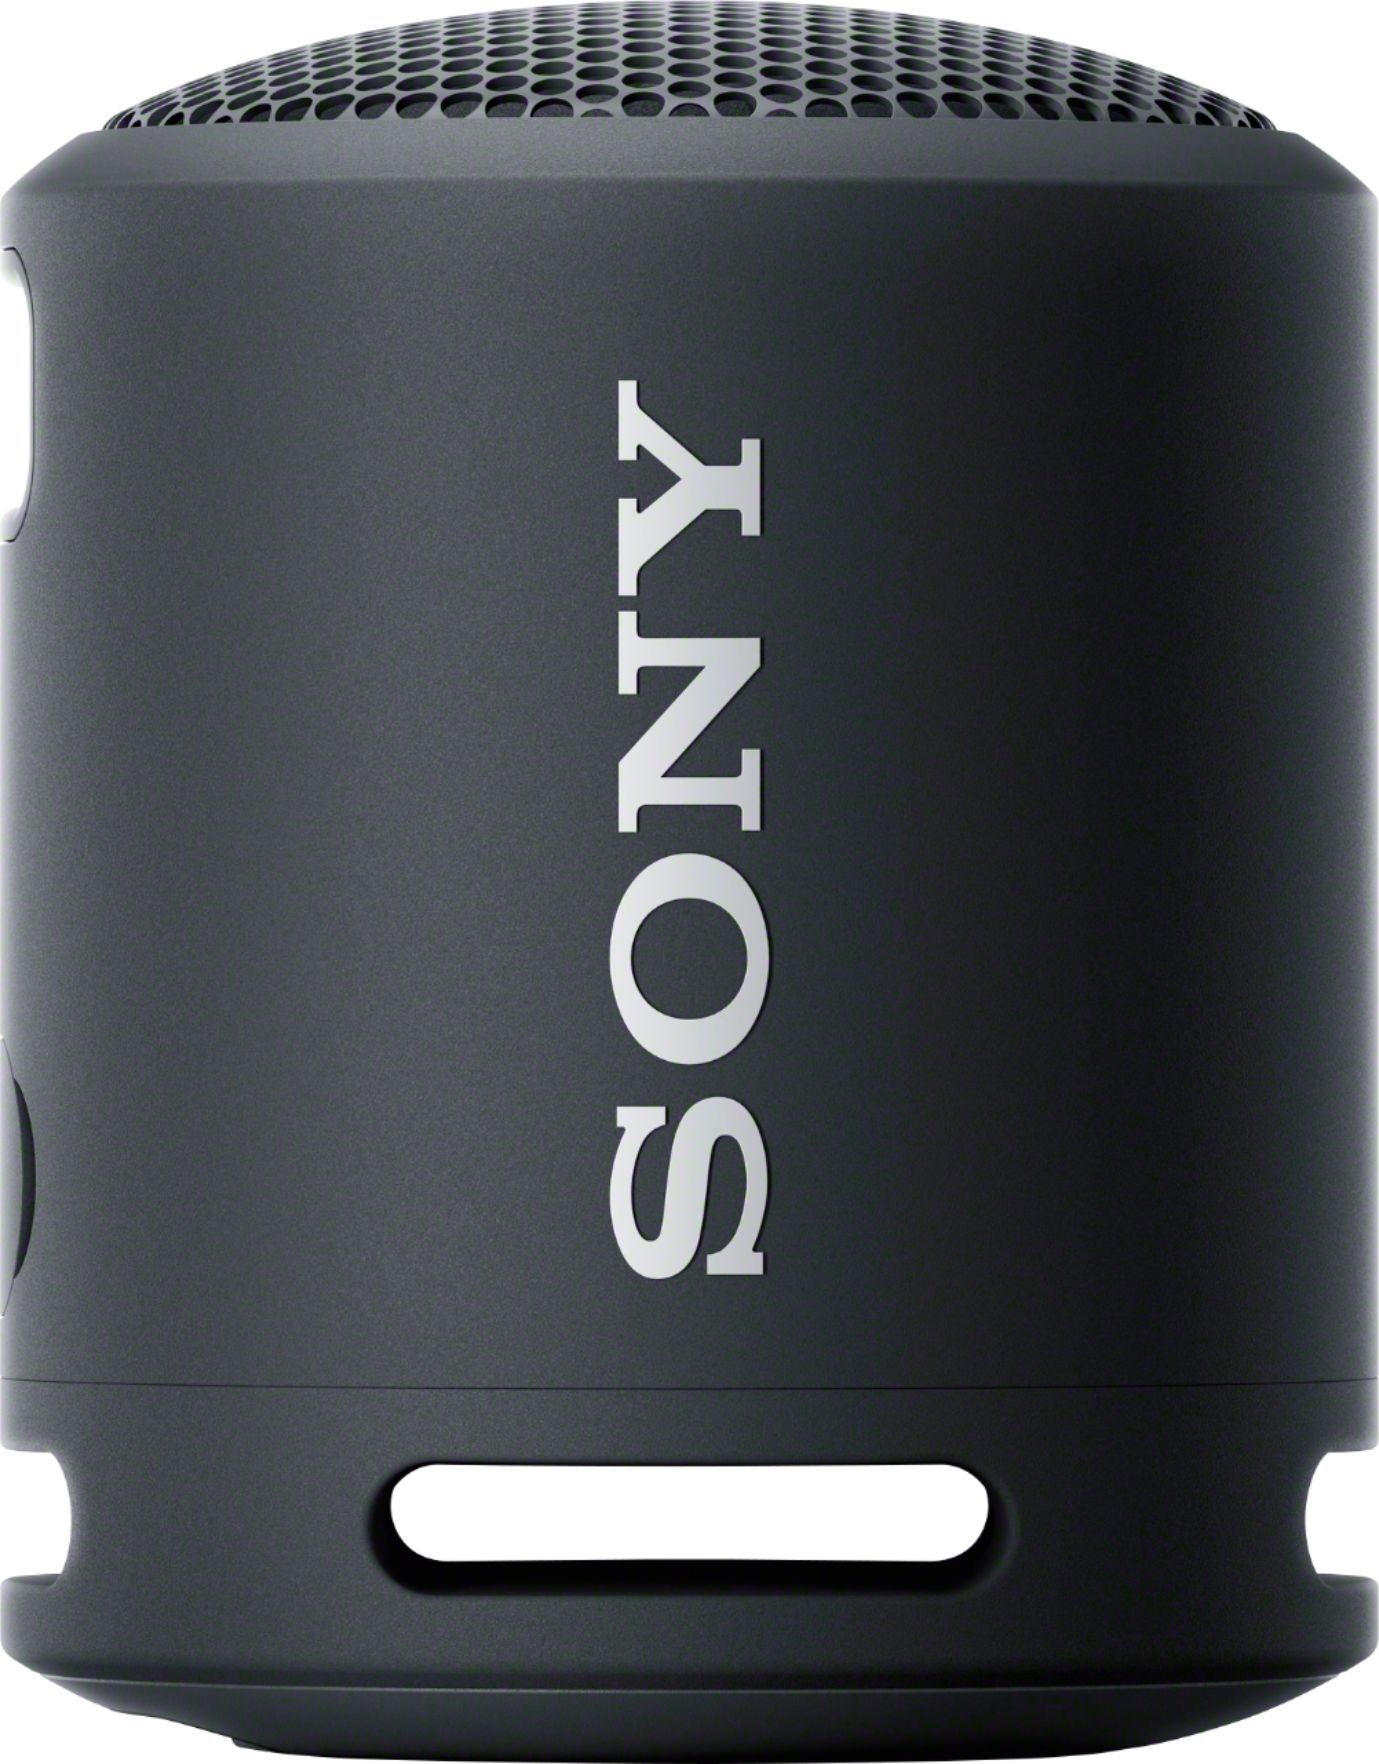 Sony EXTRA BASS Compact Portable Bluetooth Speaker Black SRSXB13/B - Best Buy | Best Buy U.S.